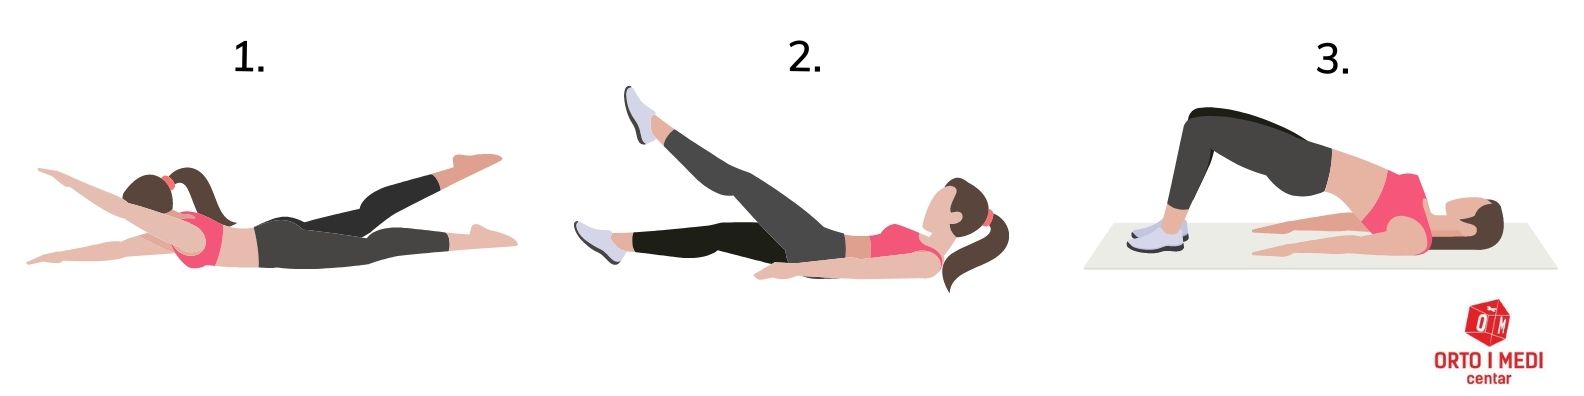 Vježbe za jačanje donjeg dijela leđa nakon poroda orto i medi centar